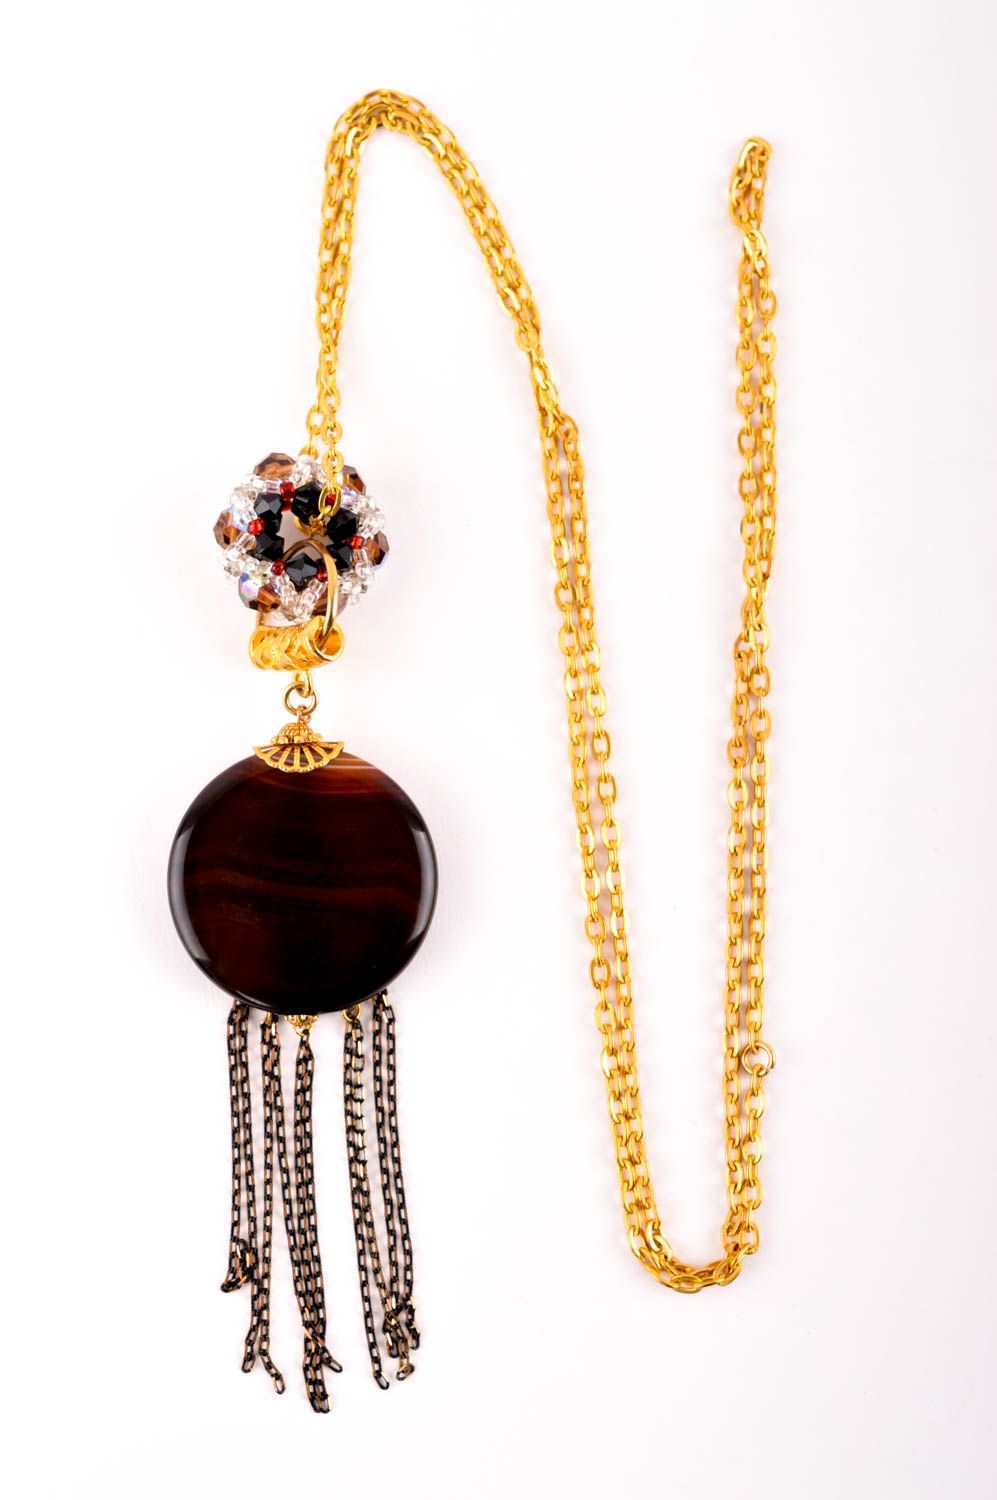 Handmade pendant designer accessory unusual gift ideas beads pendant for her photo 3